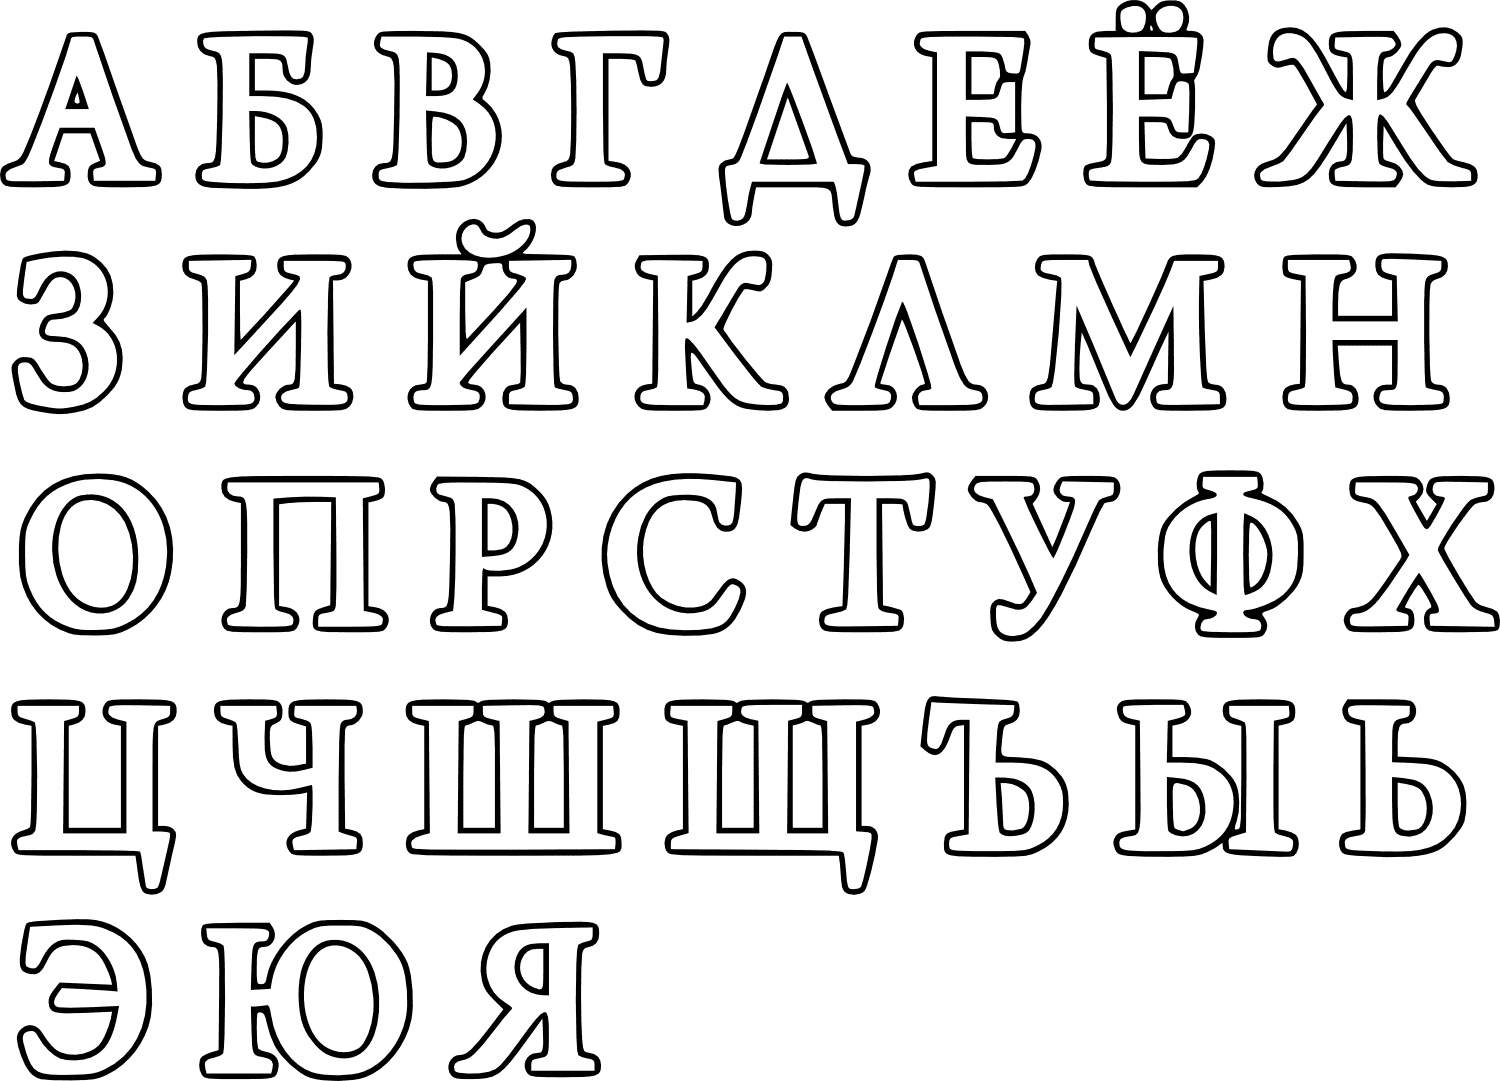 Раскраска буквы русского алфавита